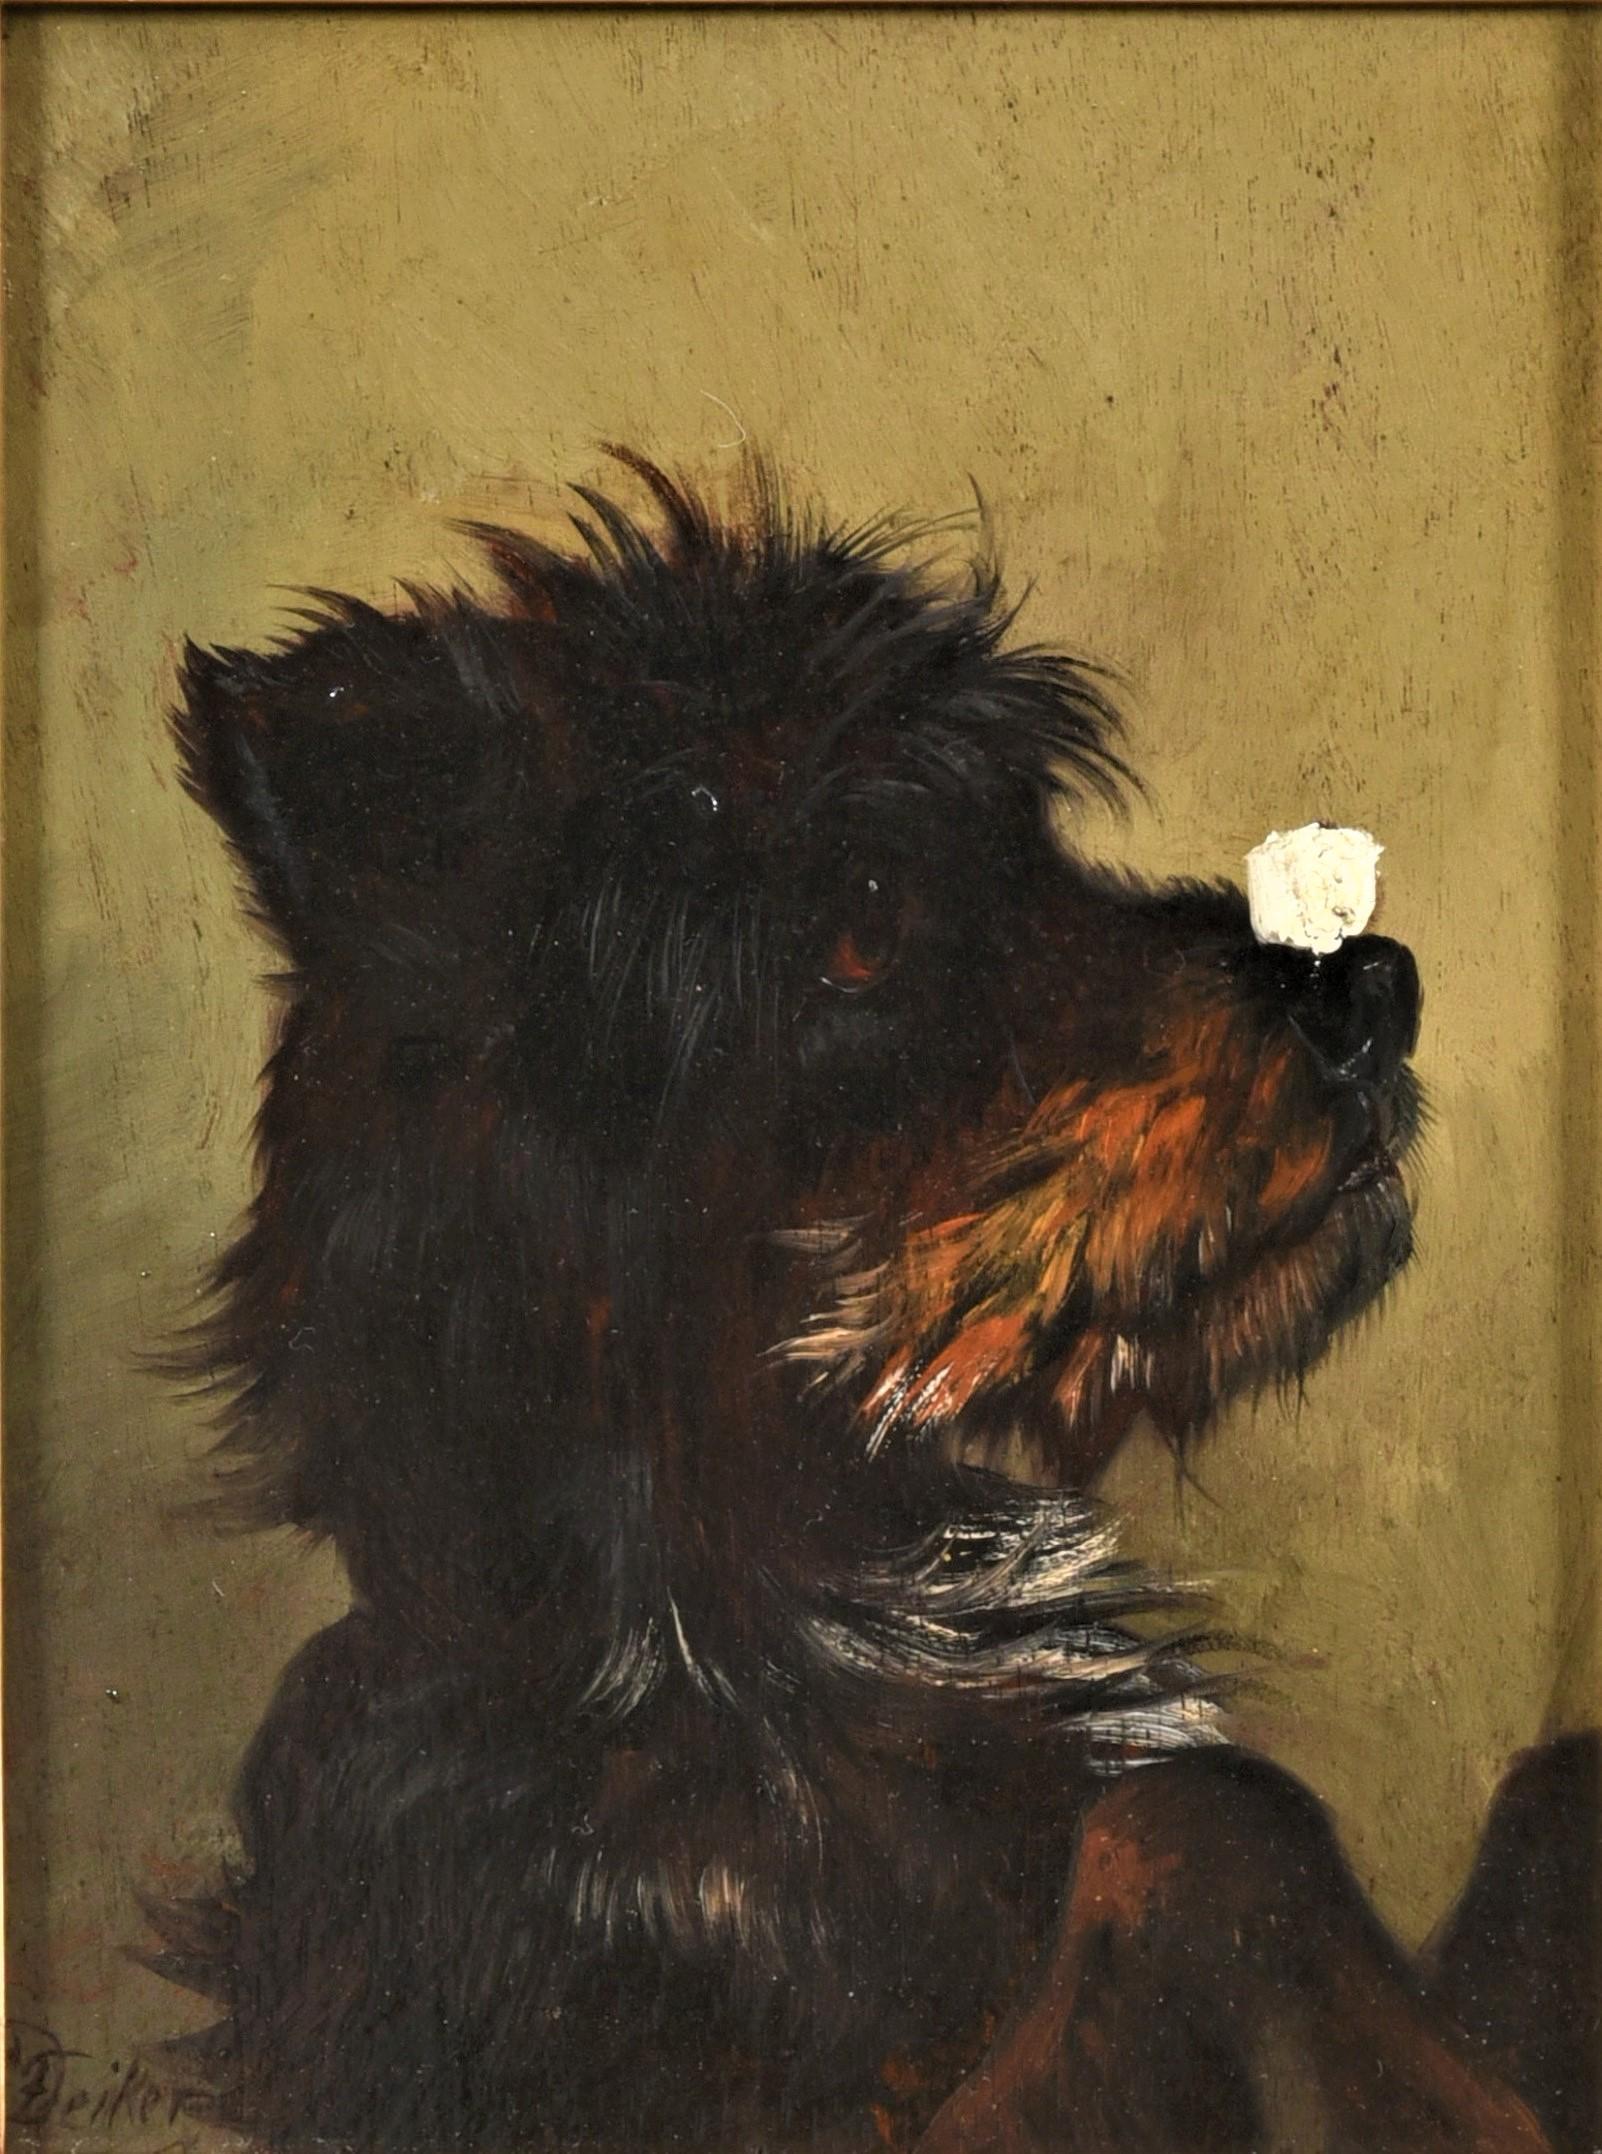 Antique Dog Portrait of a Terrier "Sugar Nose"-Carl Friedrich Deiker, circa 1870